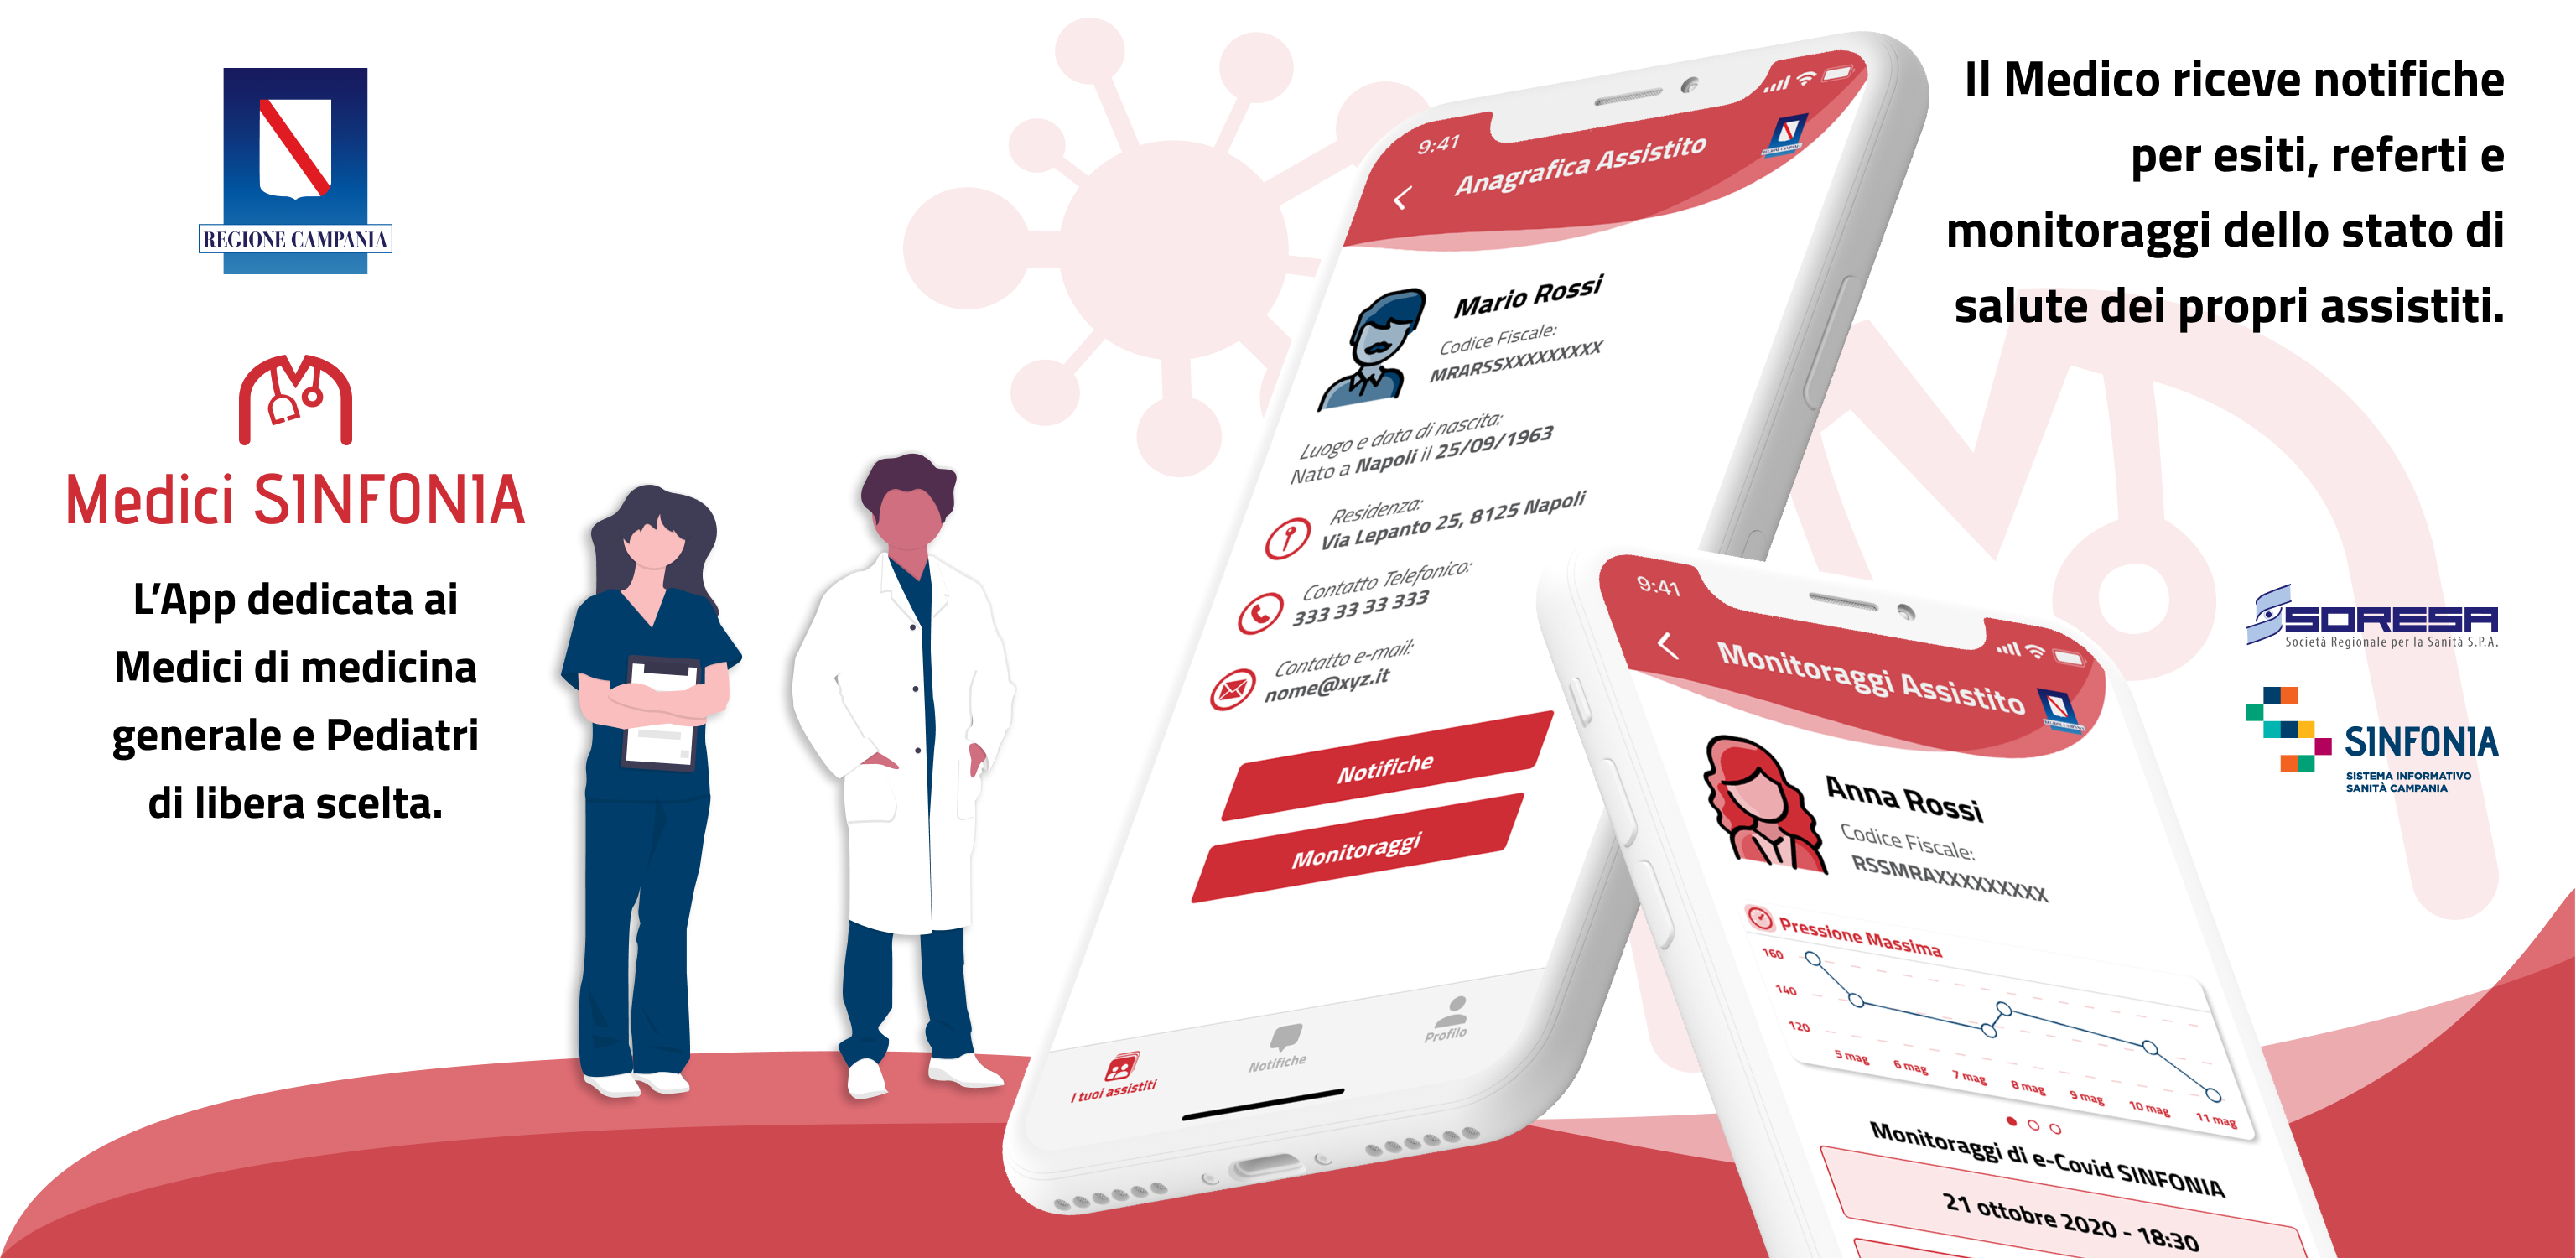 “Medici Sinfonia”, l’App per medici di Medicina generale e Pediatri di libera scelta